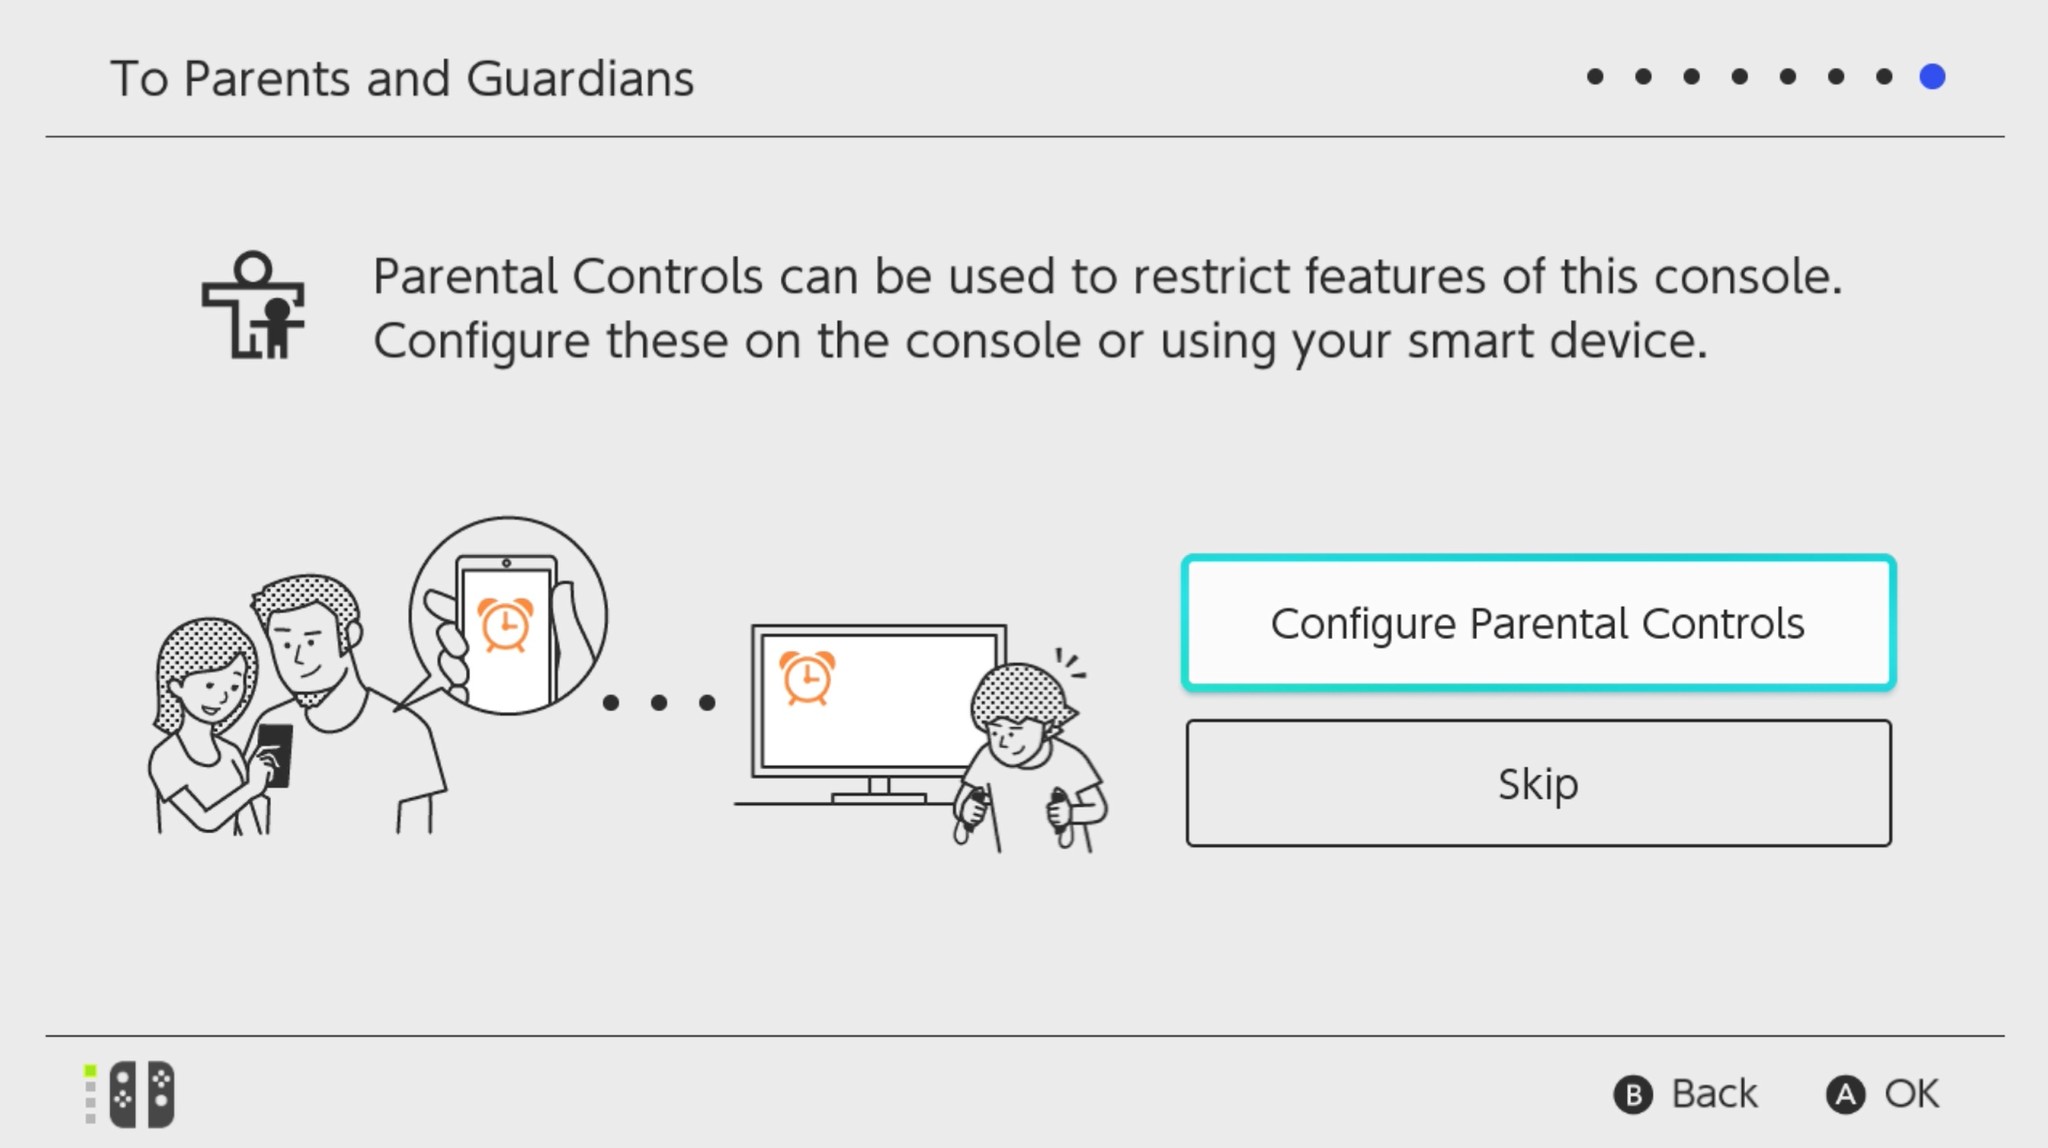 Configure Parental Controls